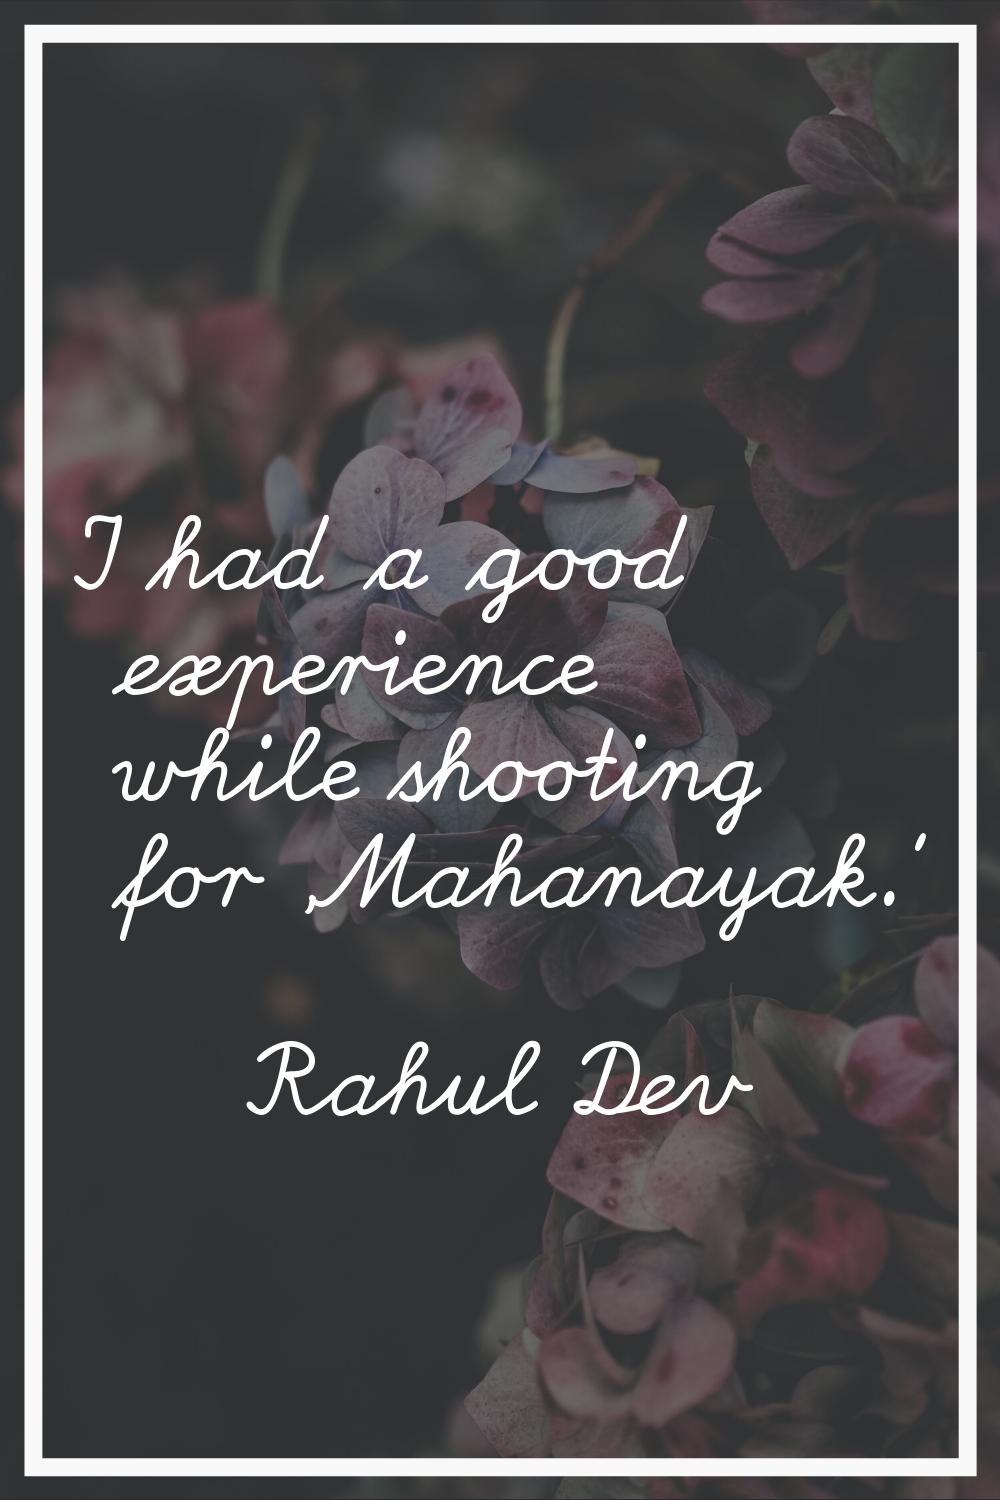 I had a good experience while shooting for 'Mahanayak.'